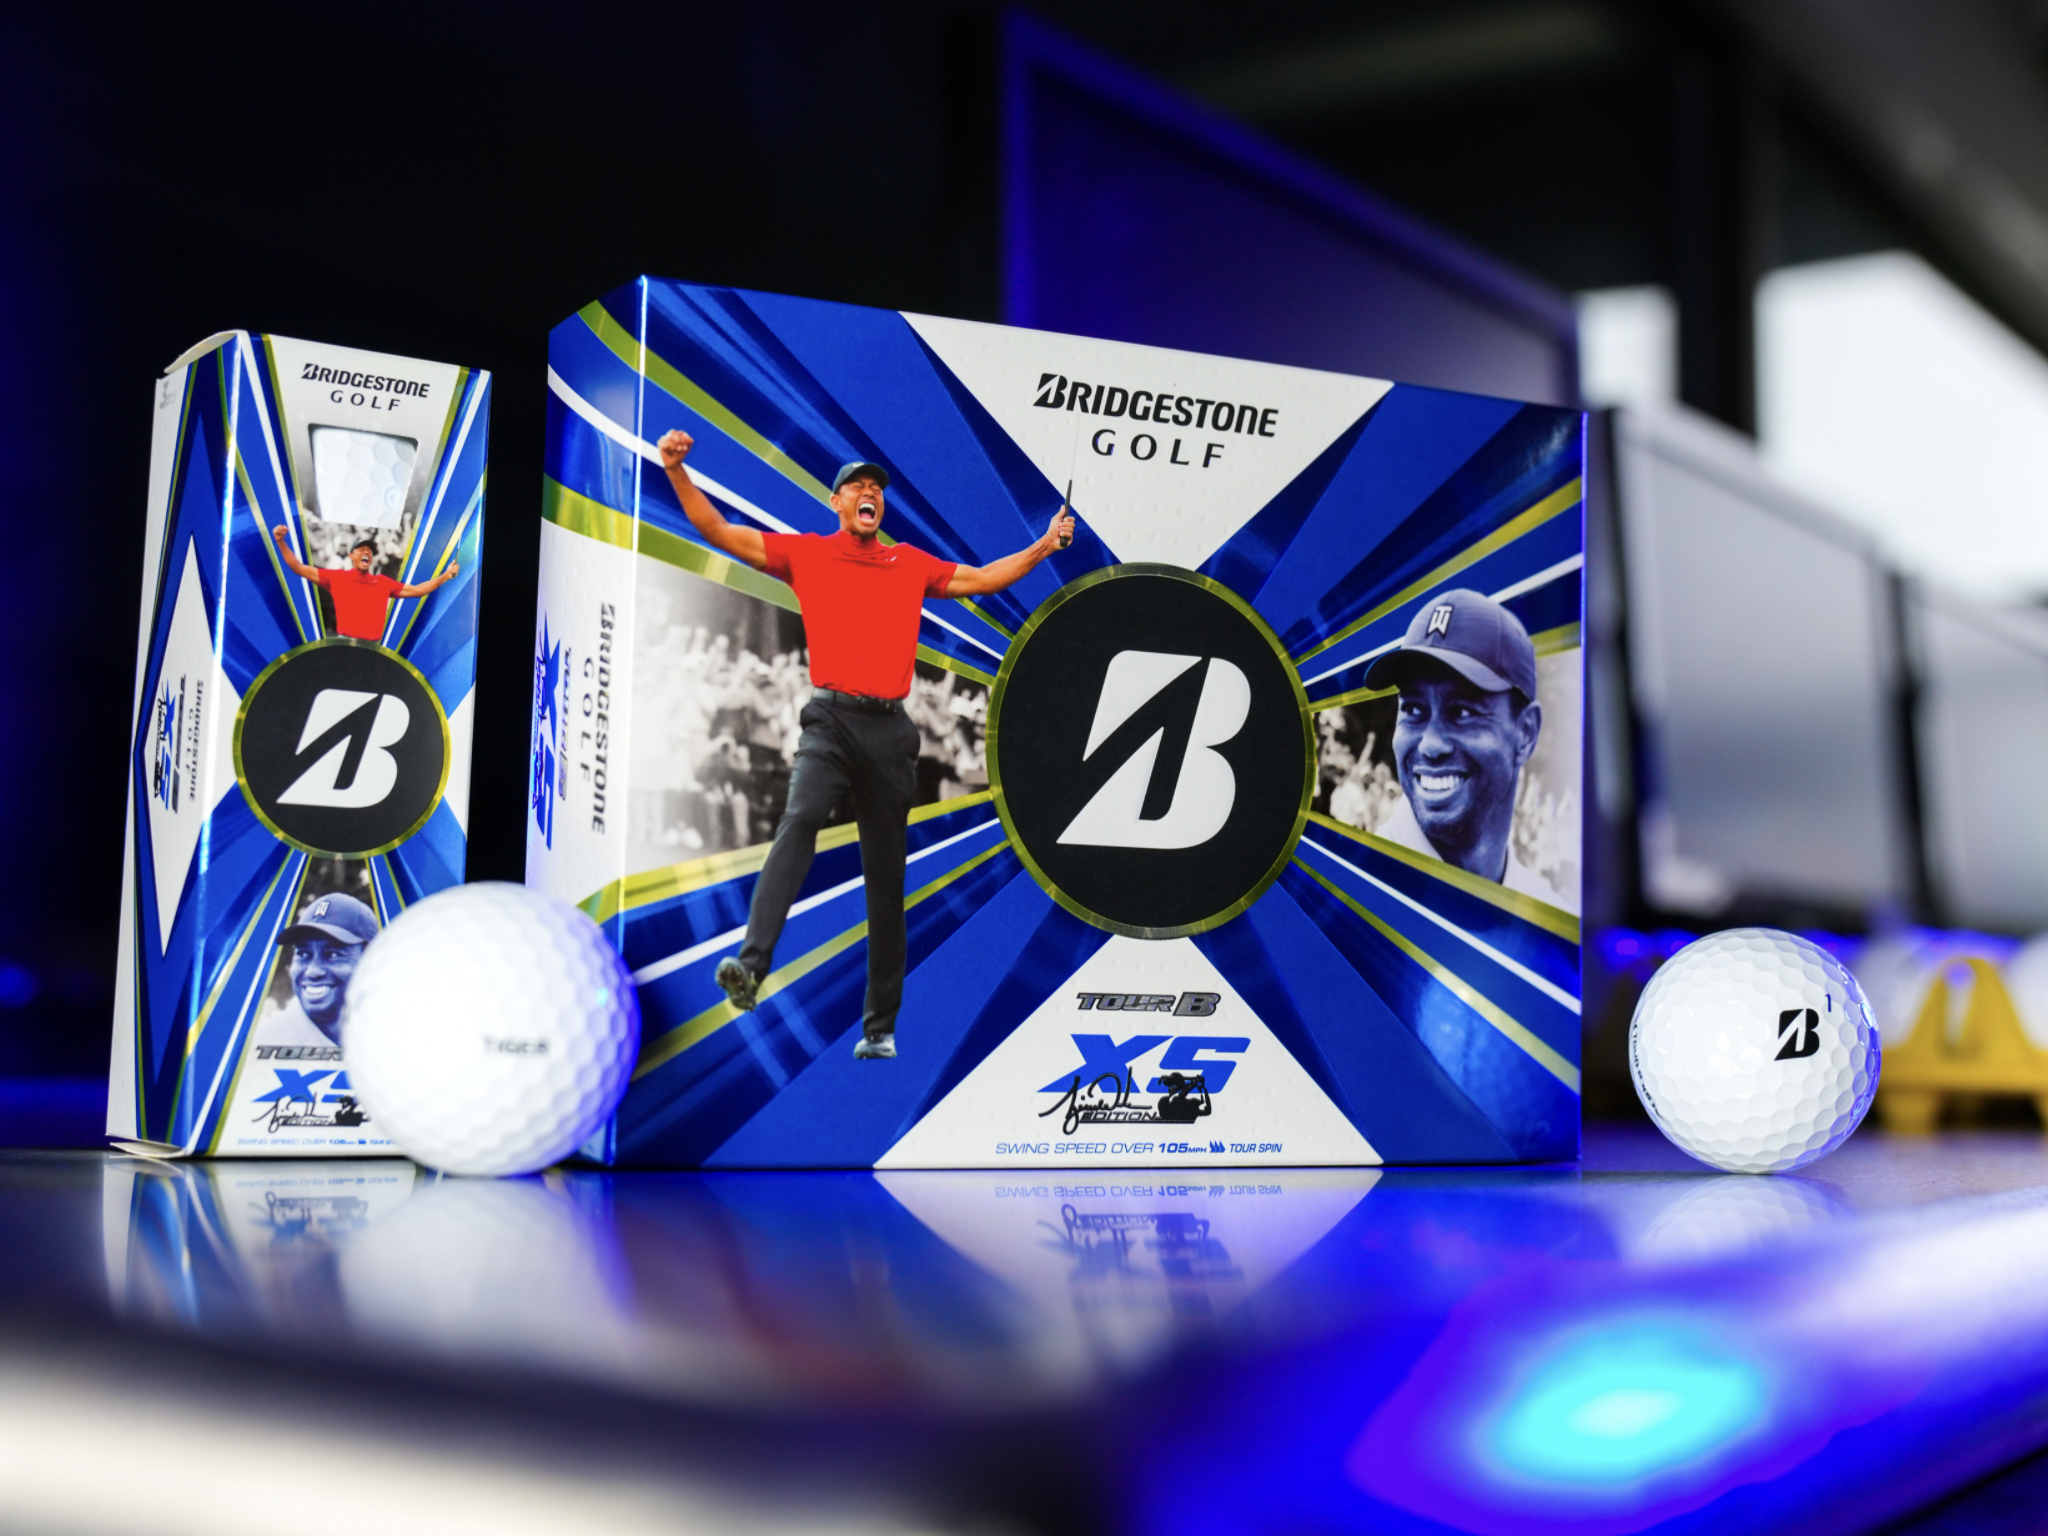 Bridgestone launches new Tour B XS Tiger Woods edition golf balls